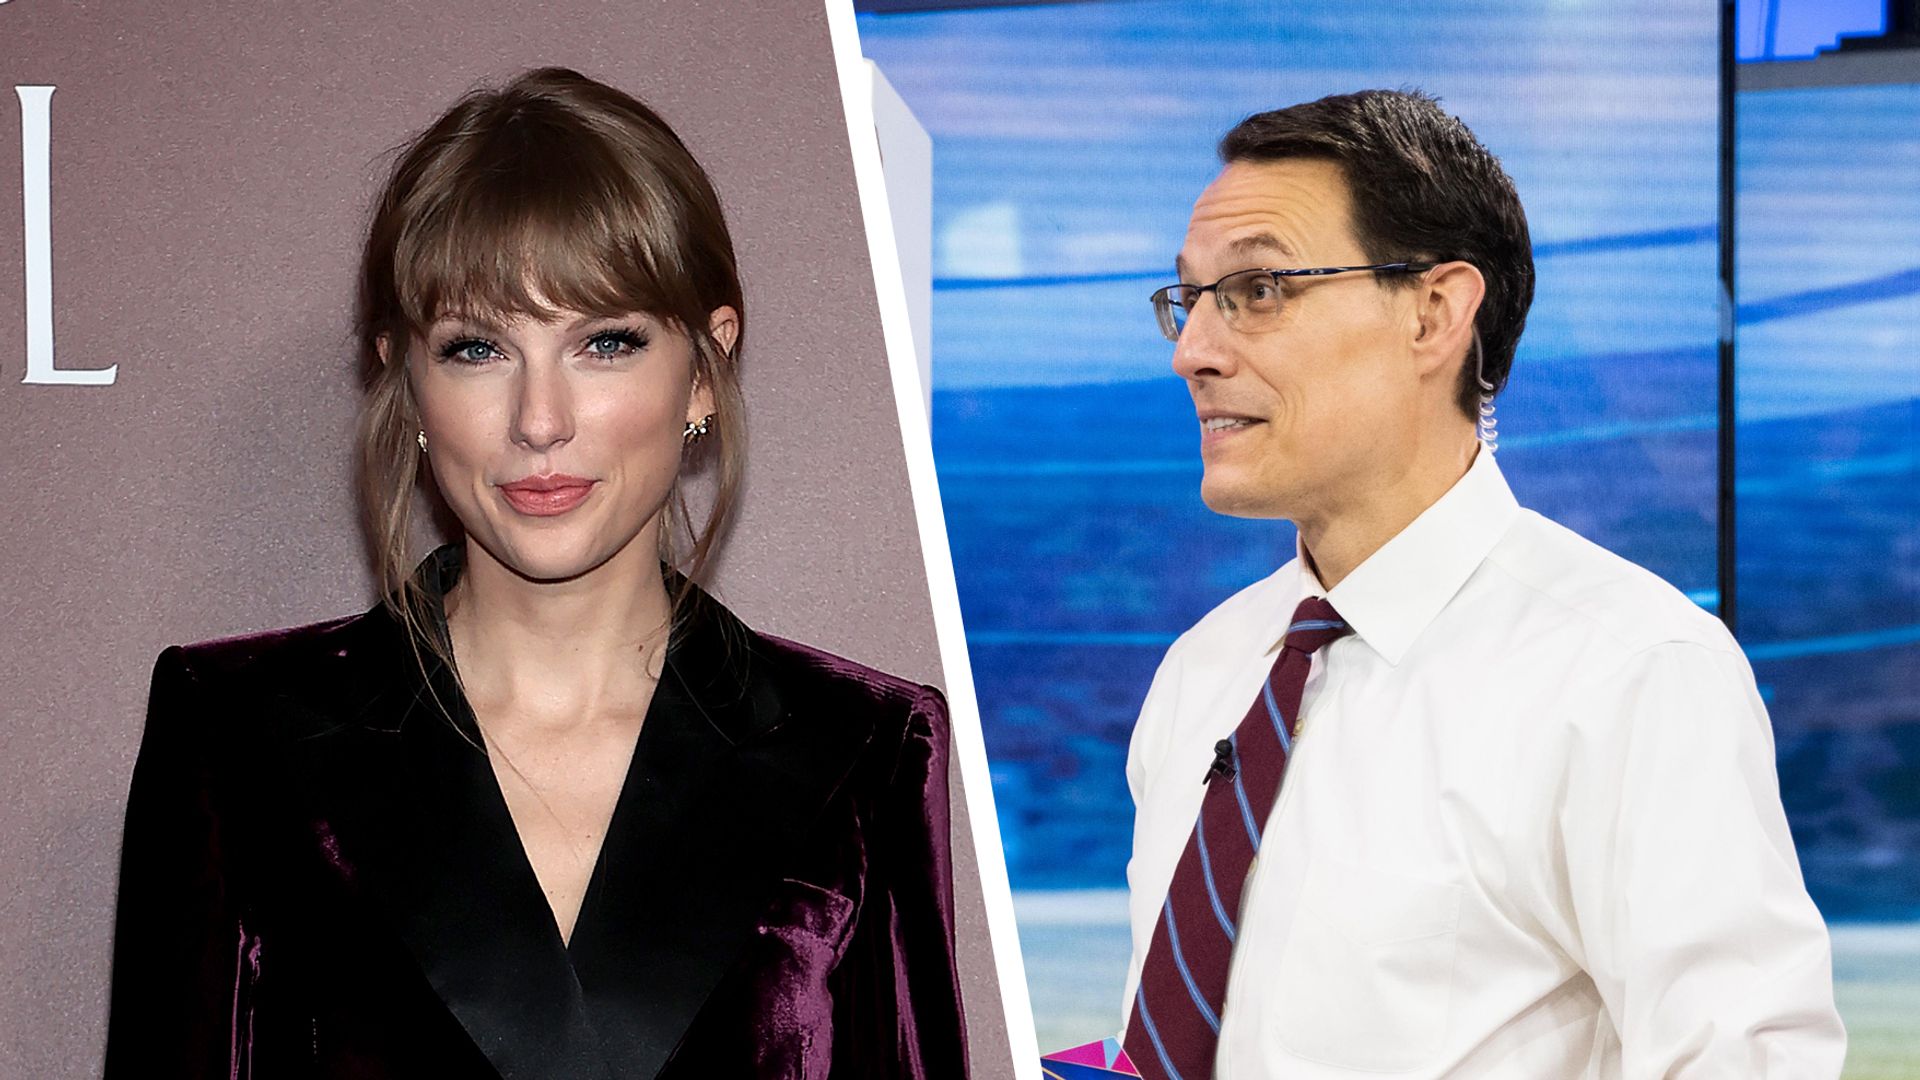 Today Show's Steve Kornocki shocks co-anchors with Taylor Swift revelation nobody was expecting